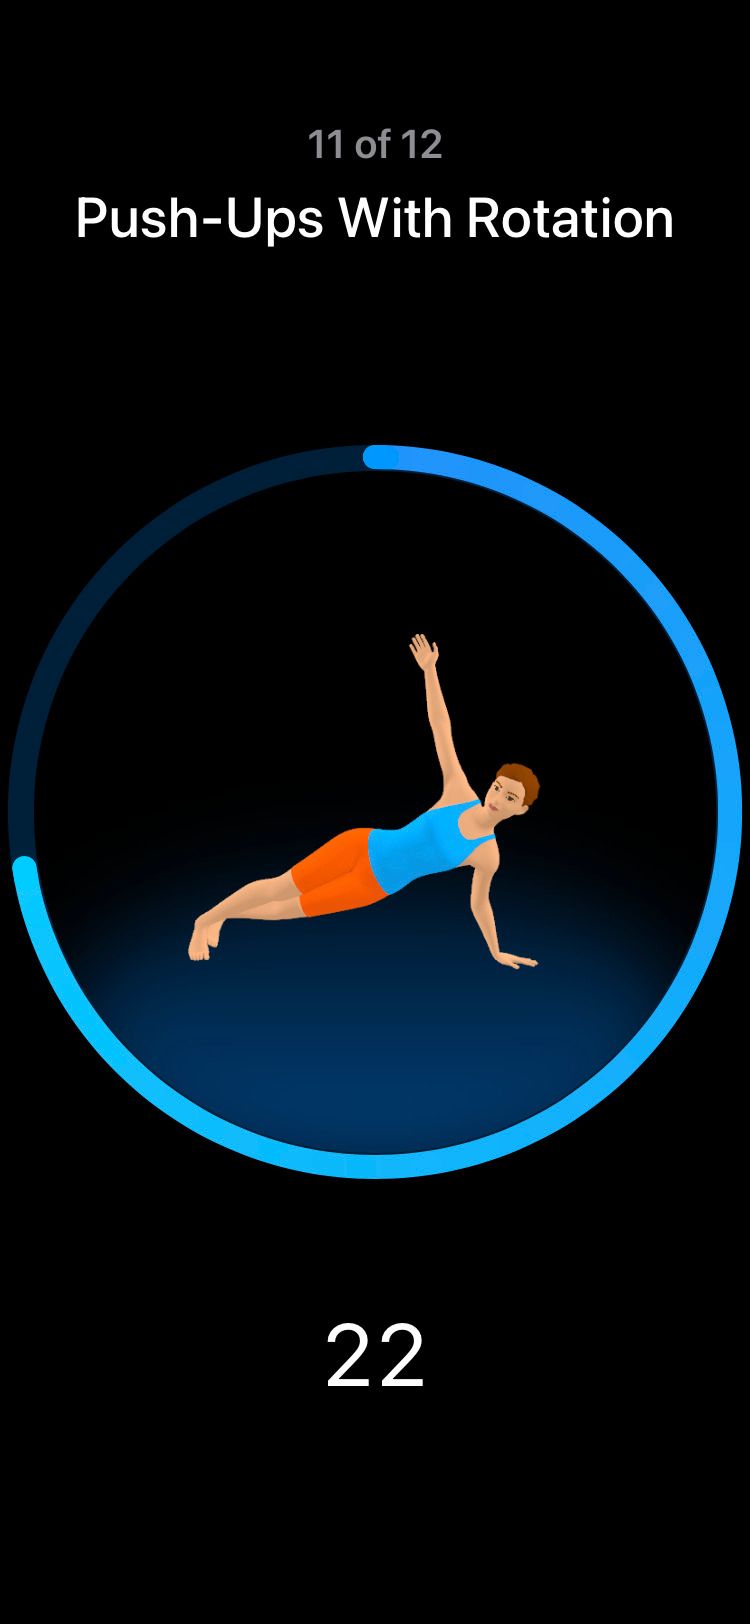 Seven - 7 Minute Workout pushups